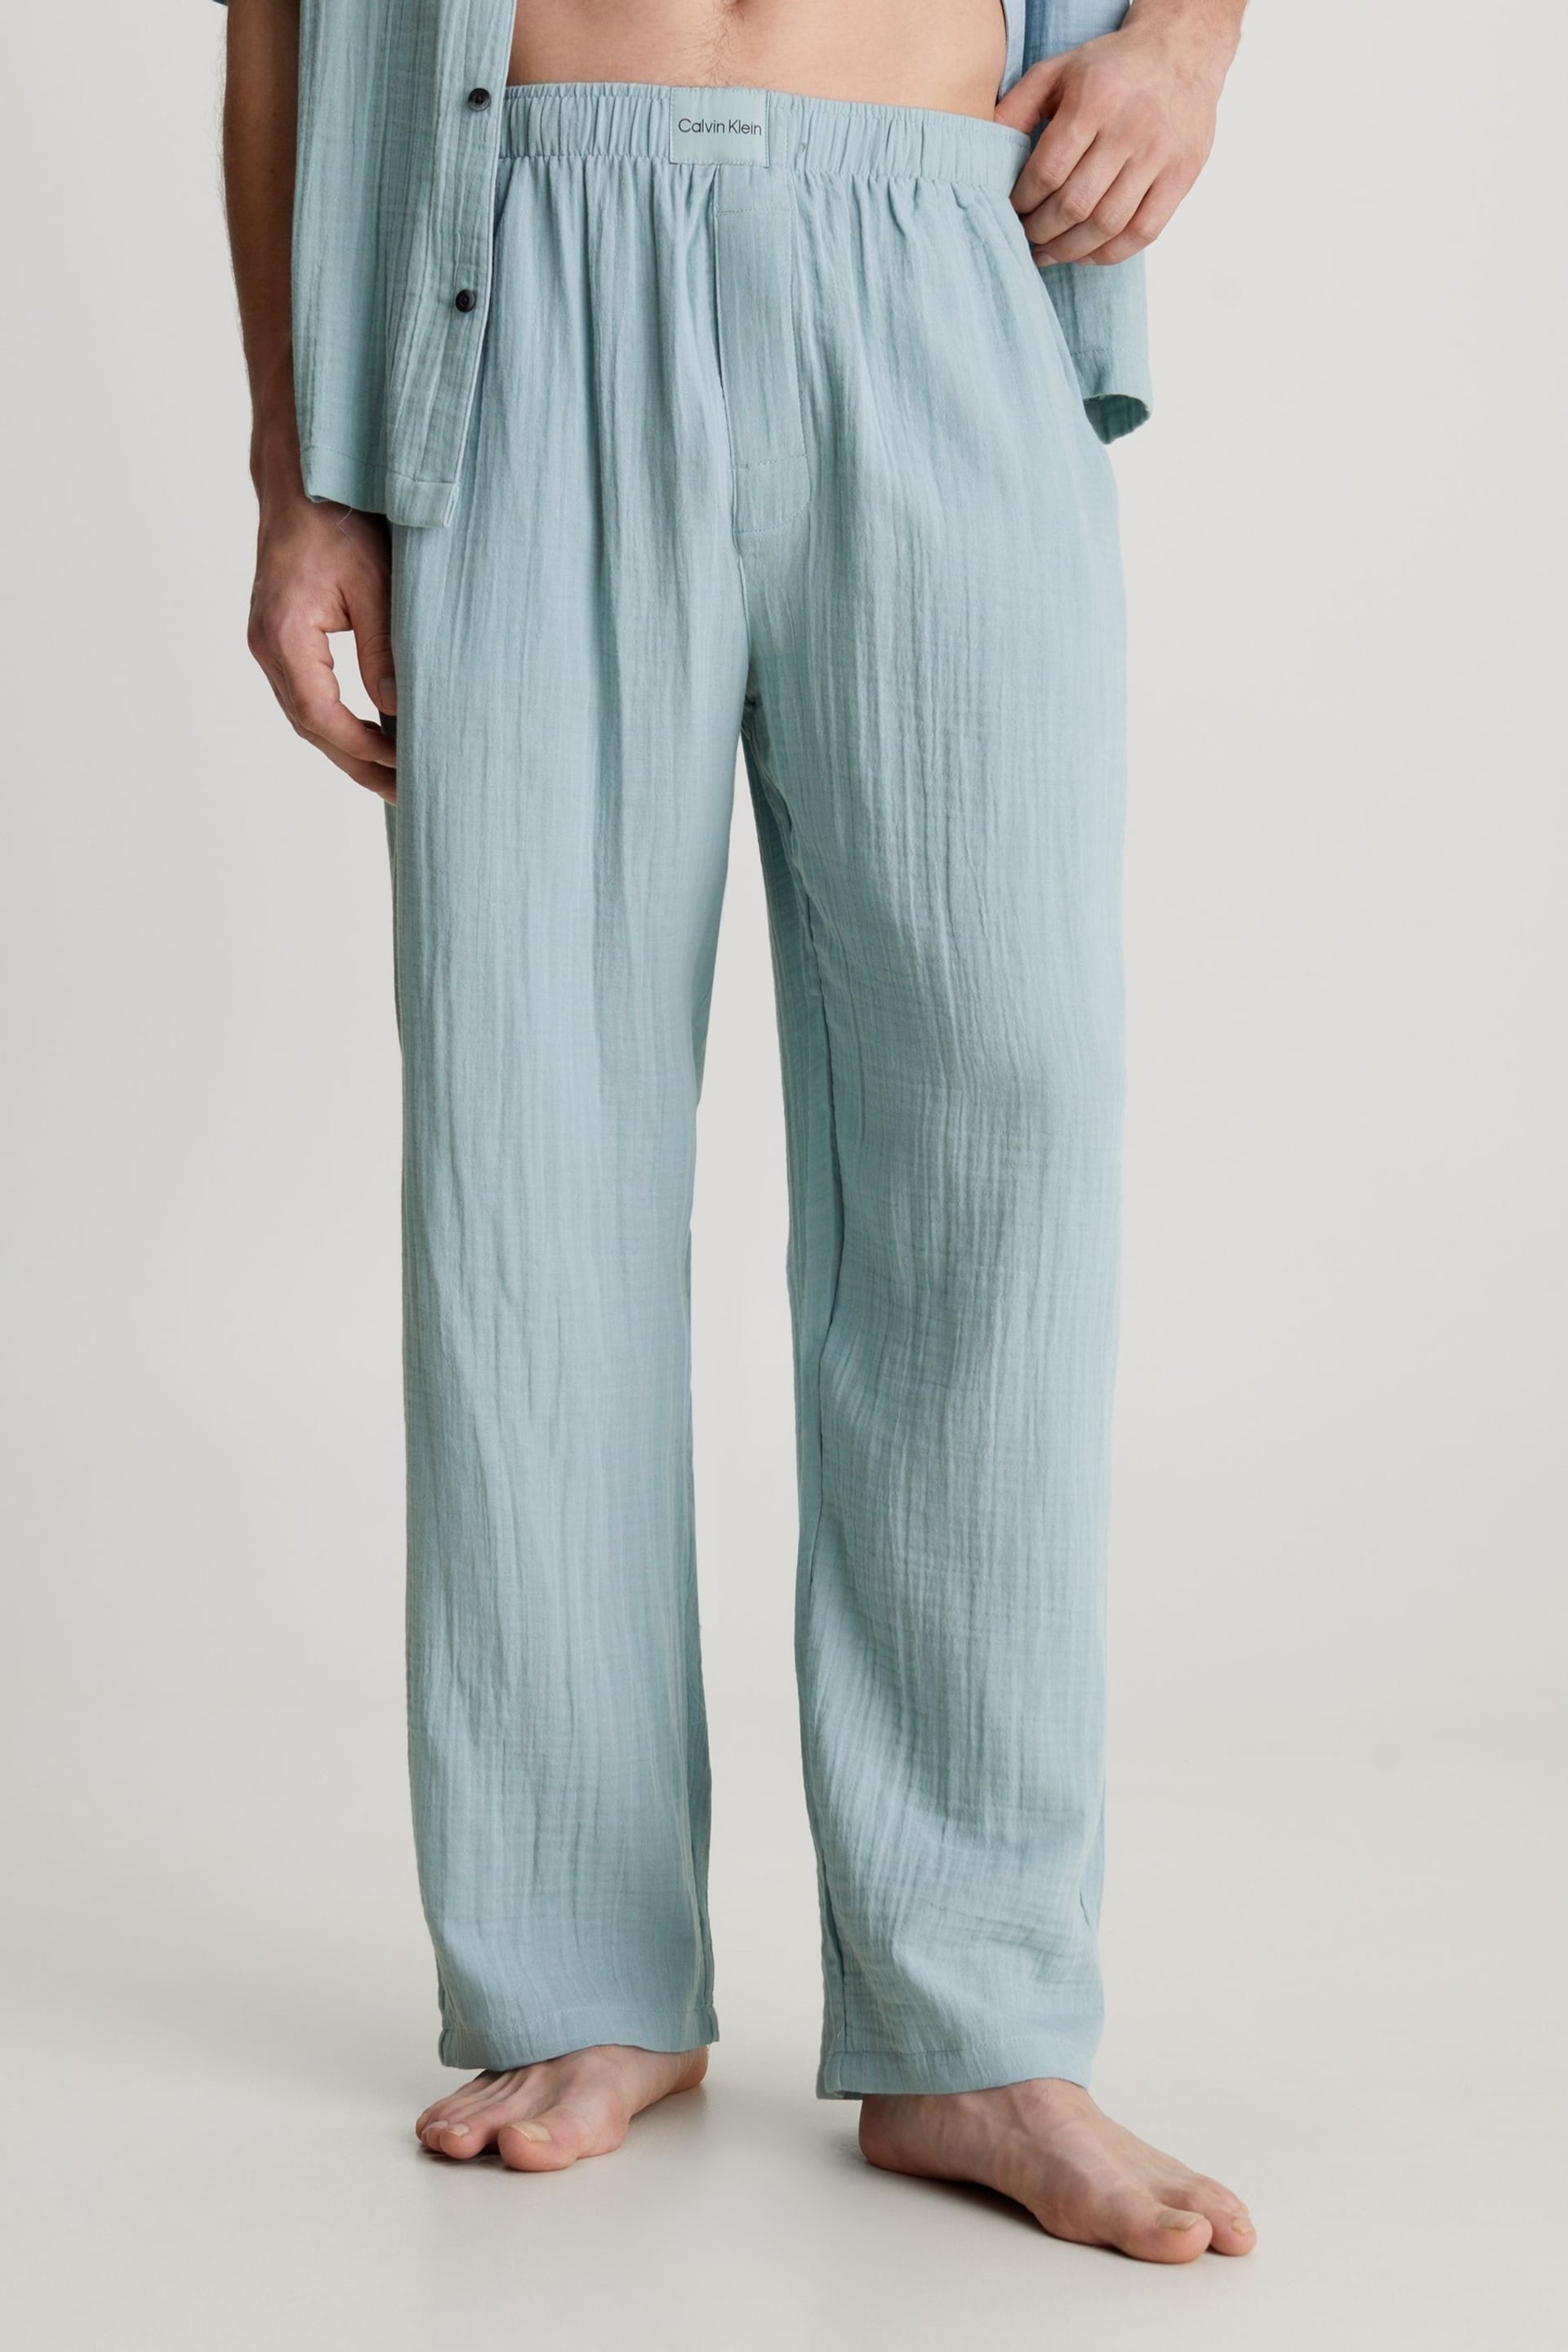 Calvin Klein Blue Single Cotton Sleep Trousers - Image 1 of 4